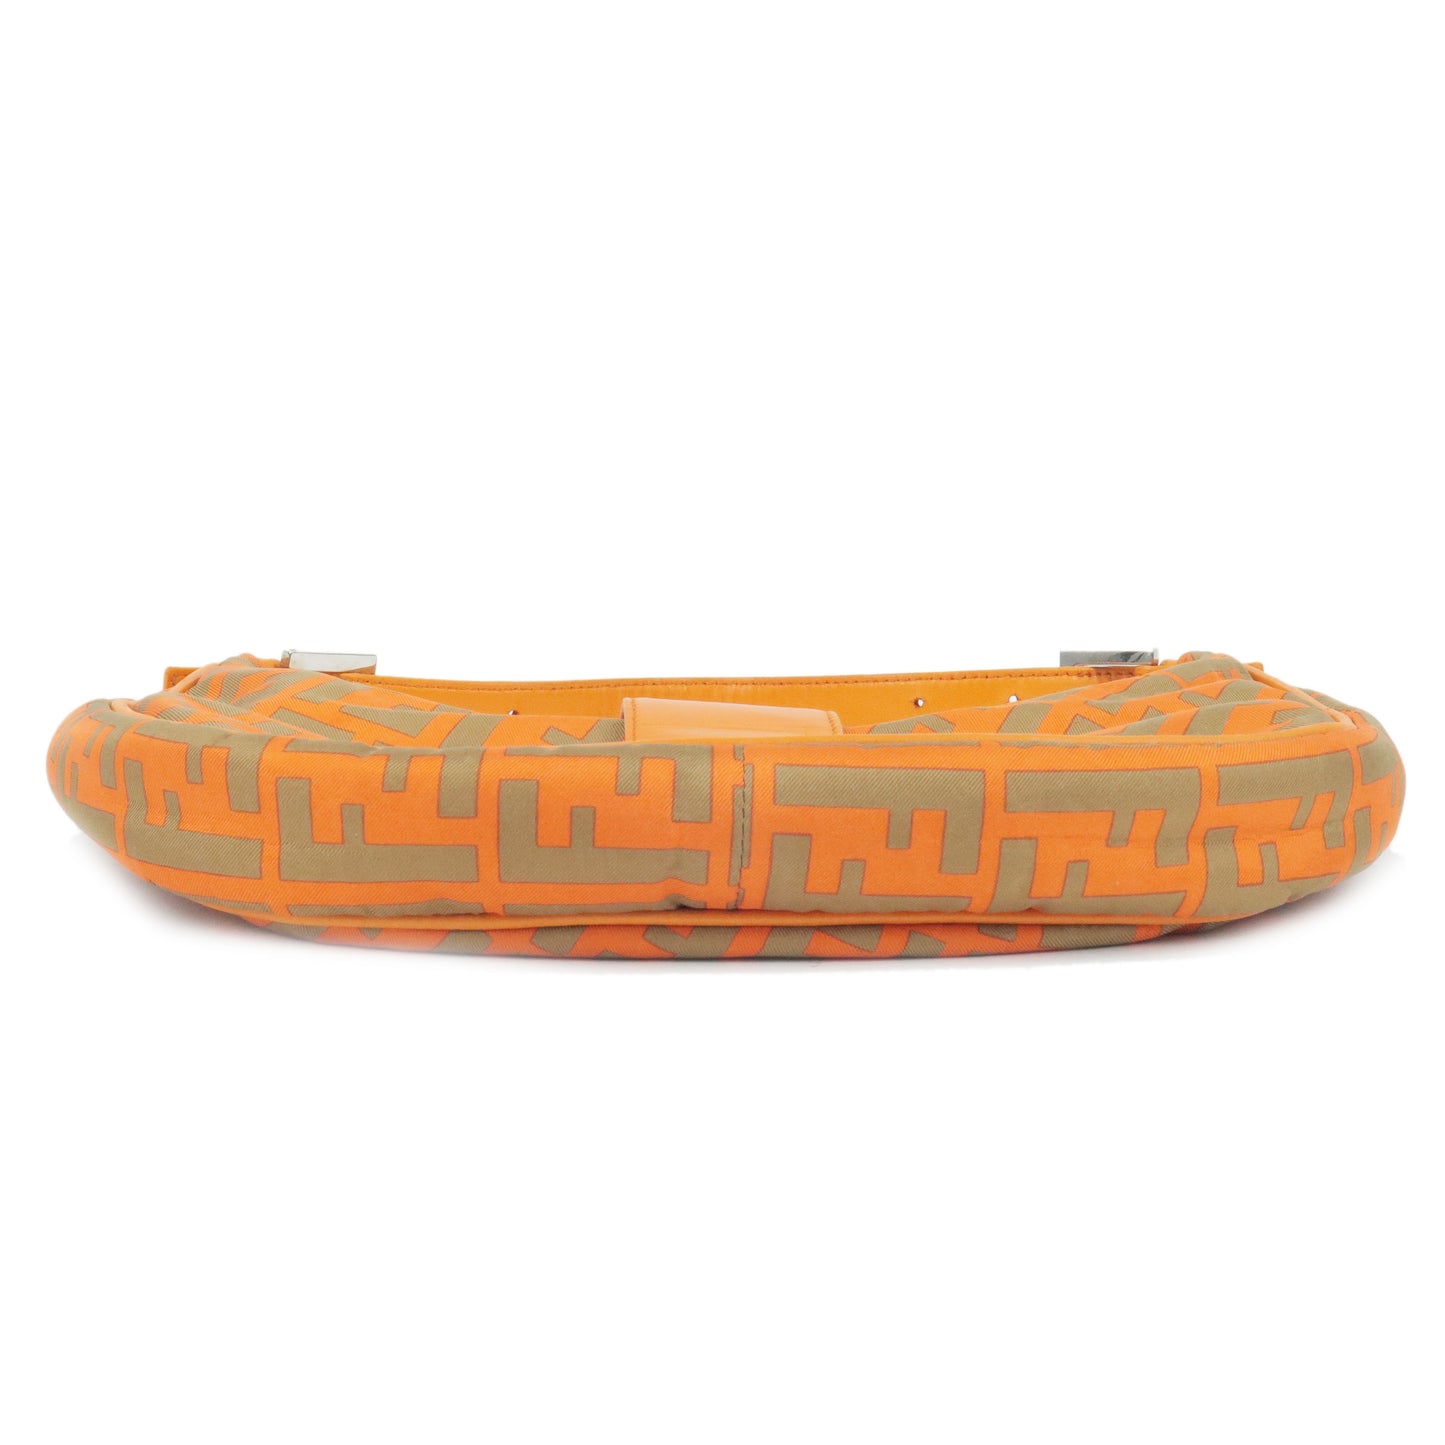 FENDI Zucca Nylon Leather Shoulder Bag Orange Khaki 09163211001